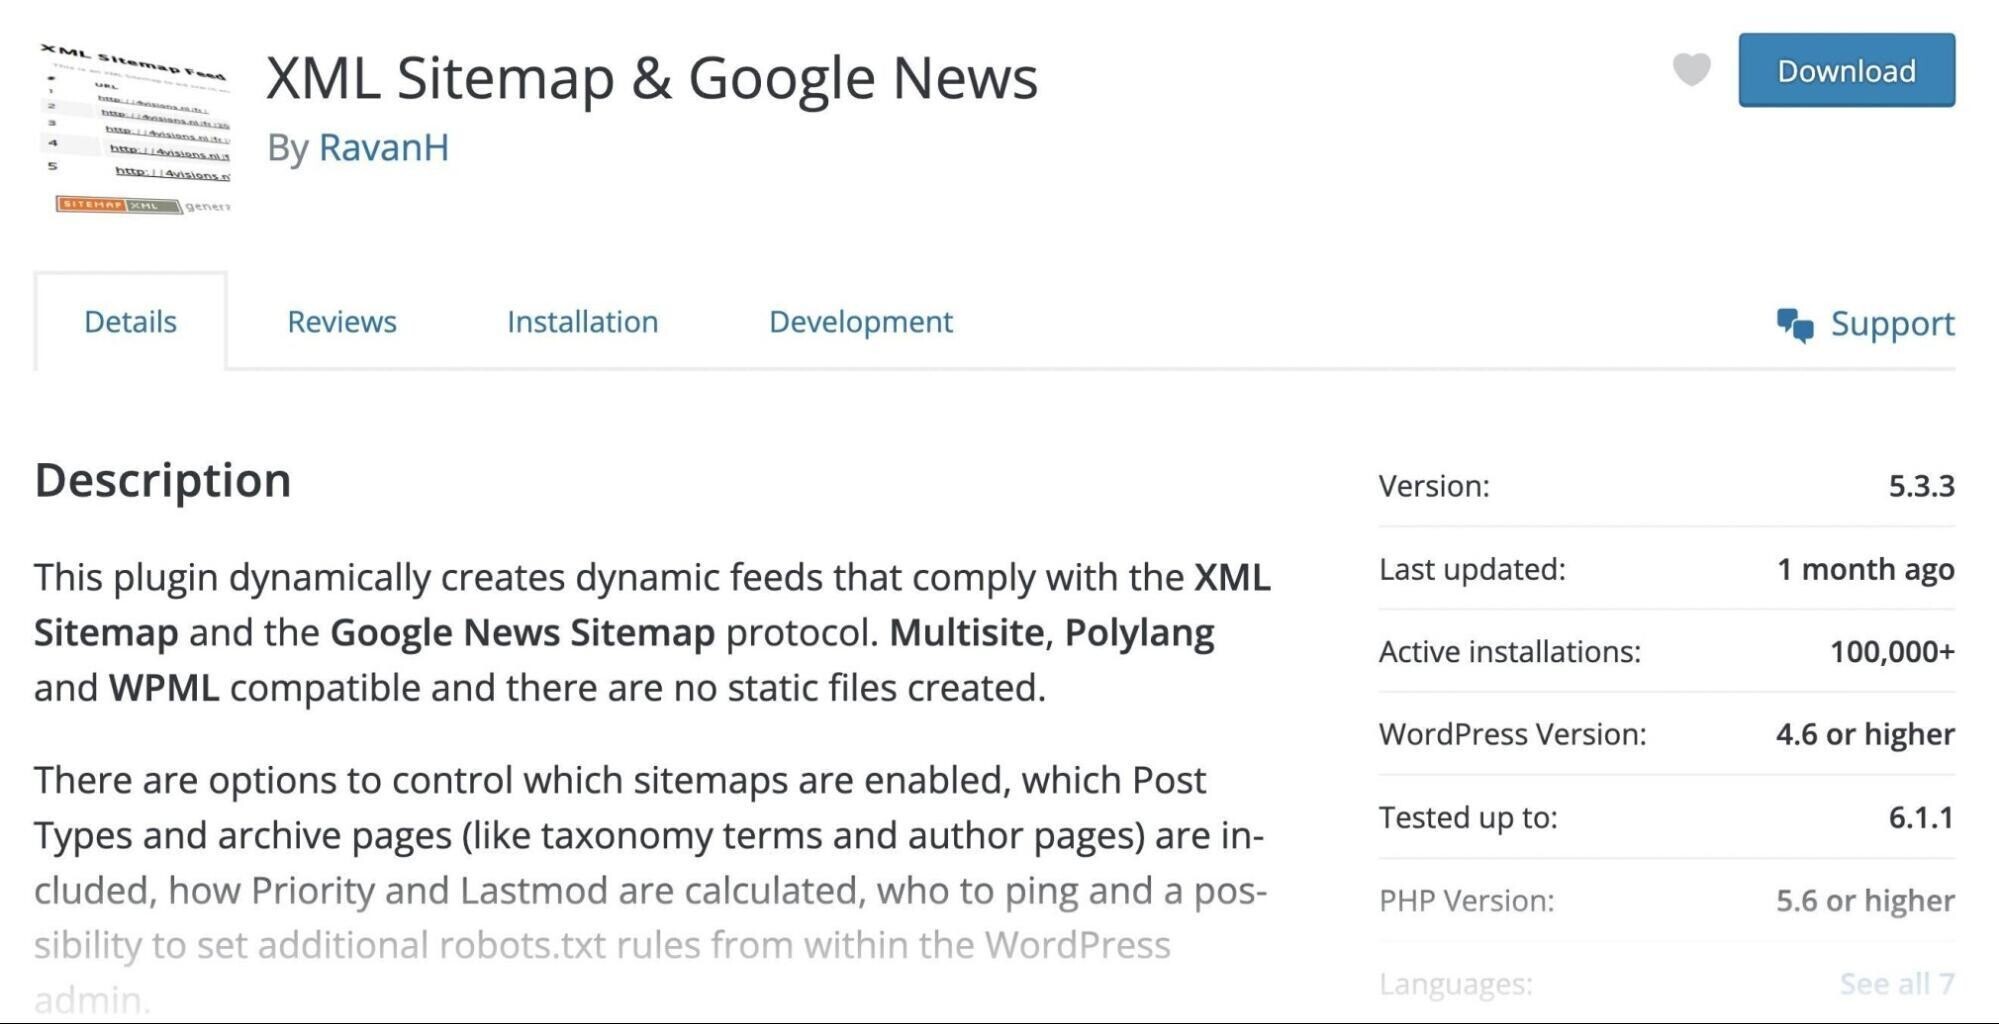 xml sitemap and google news plugin information